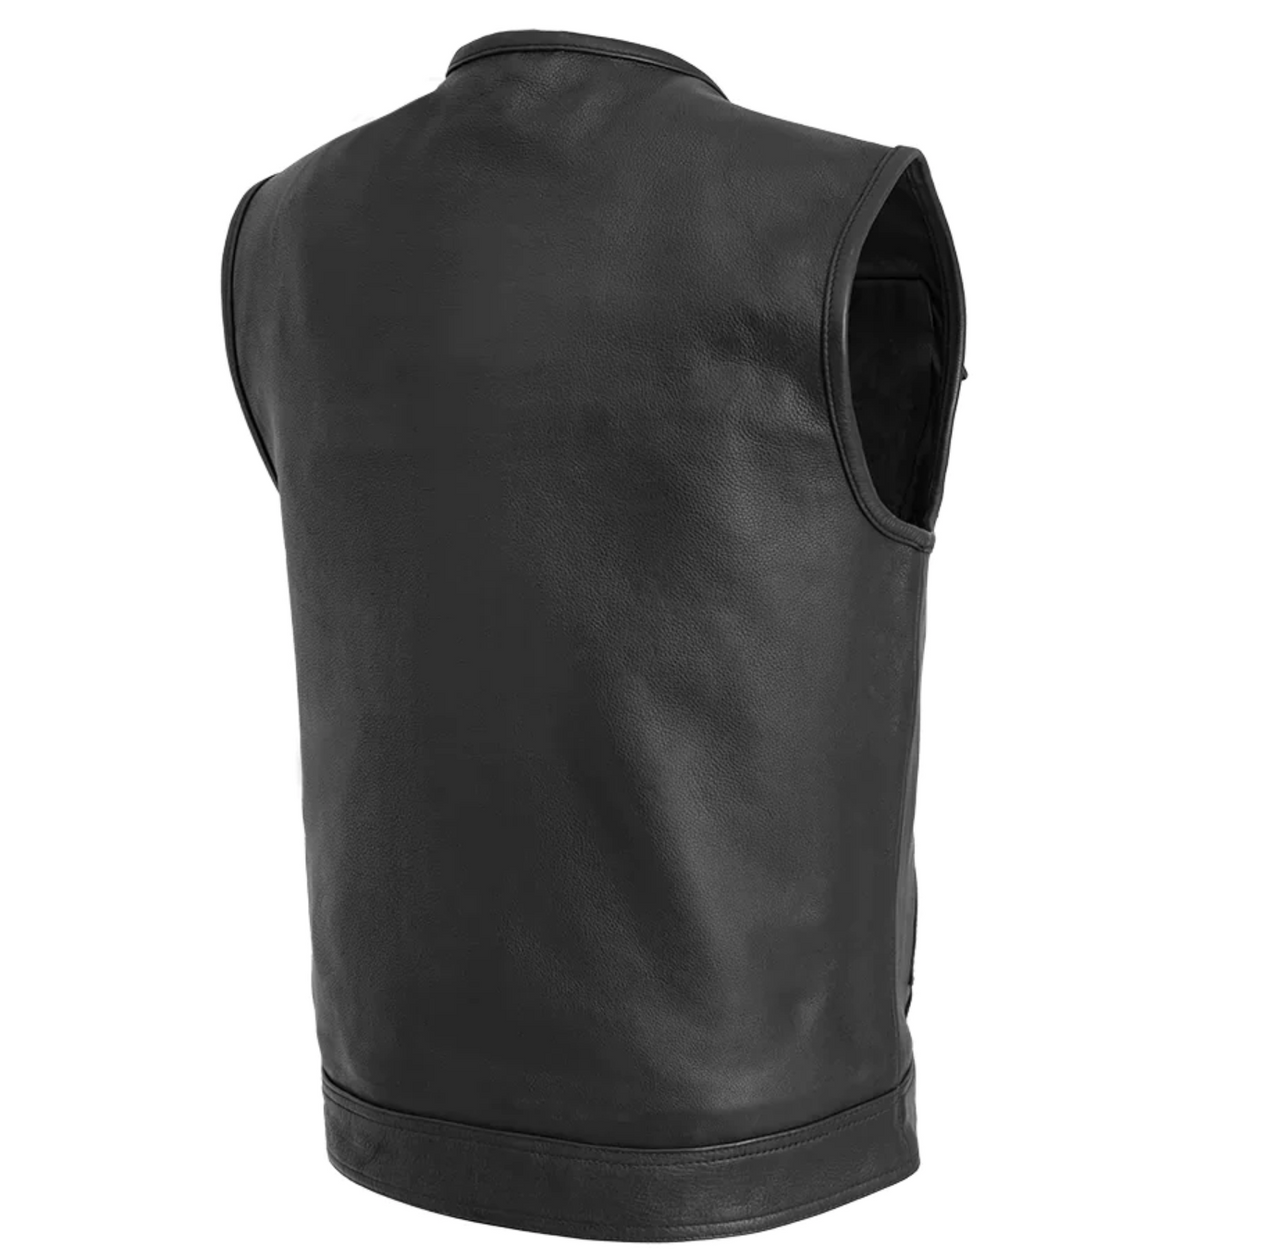 Men's Club Style Leather Vest Custom Hype Beast Max 